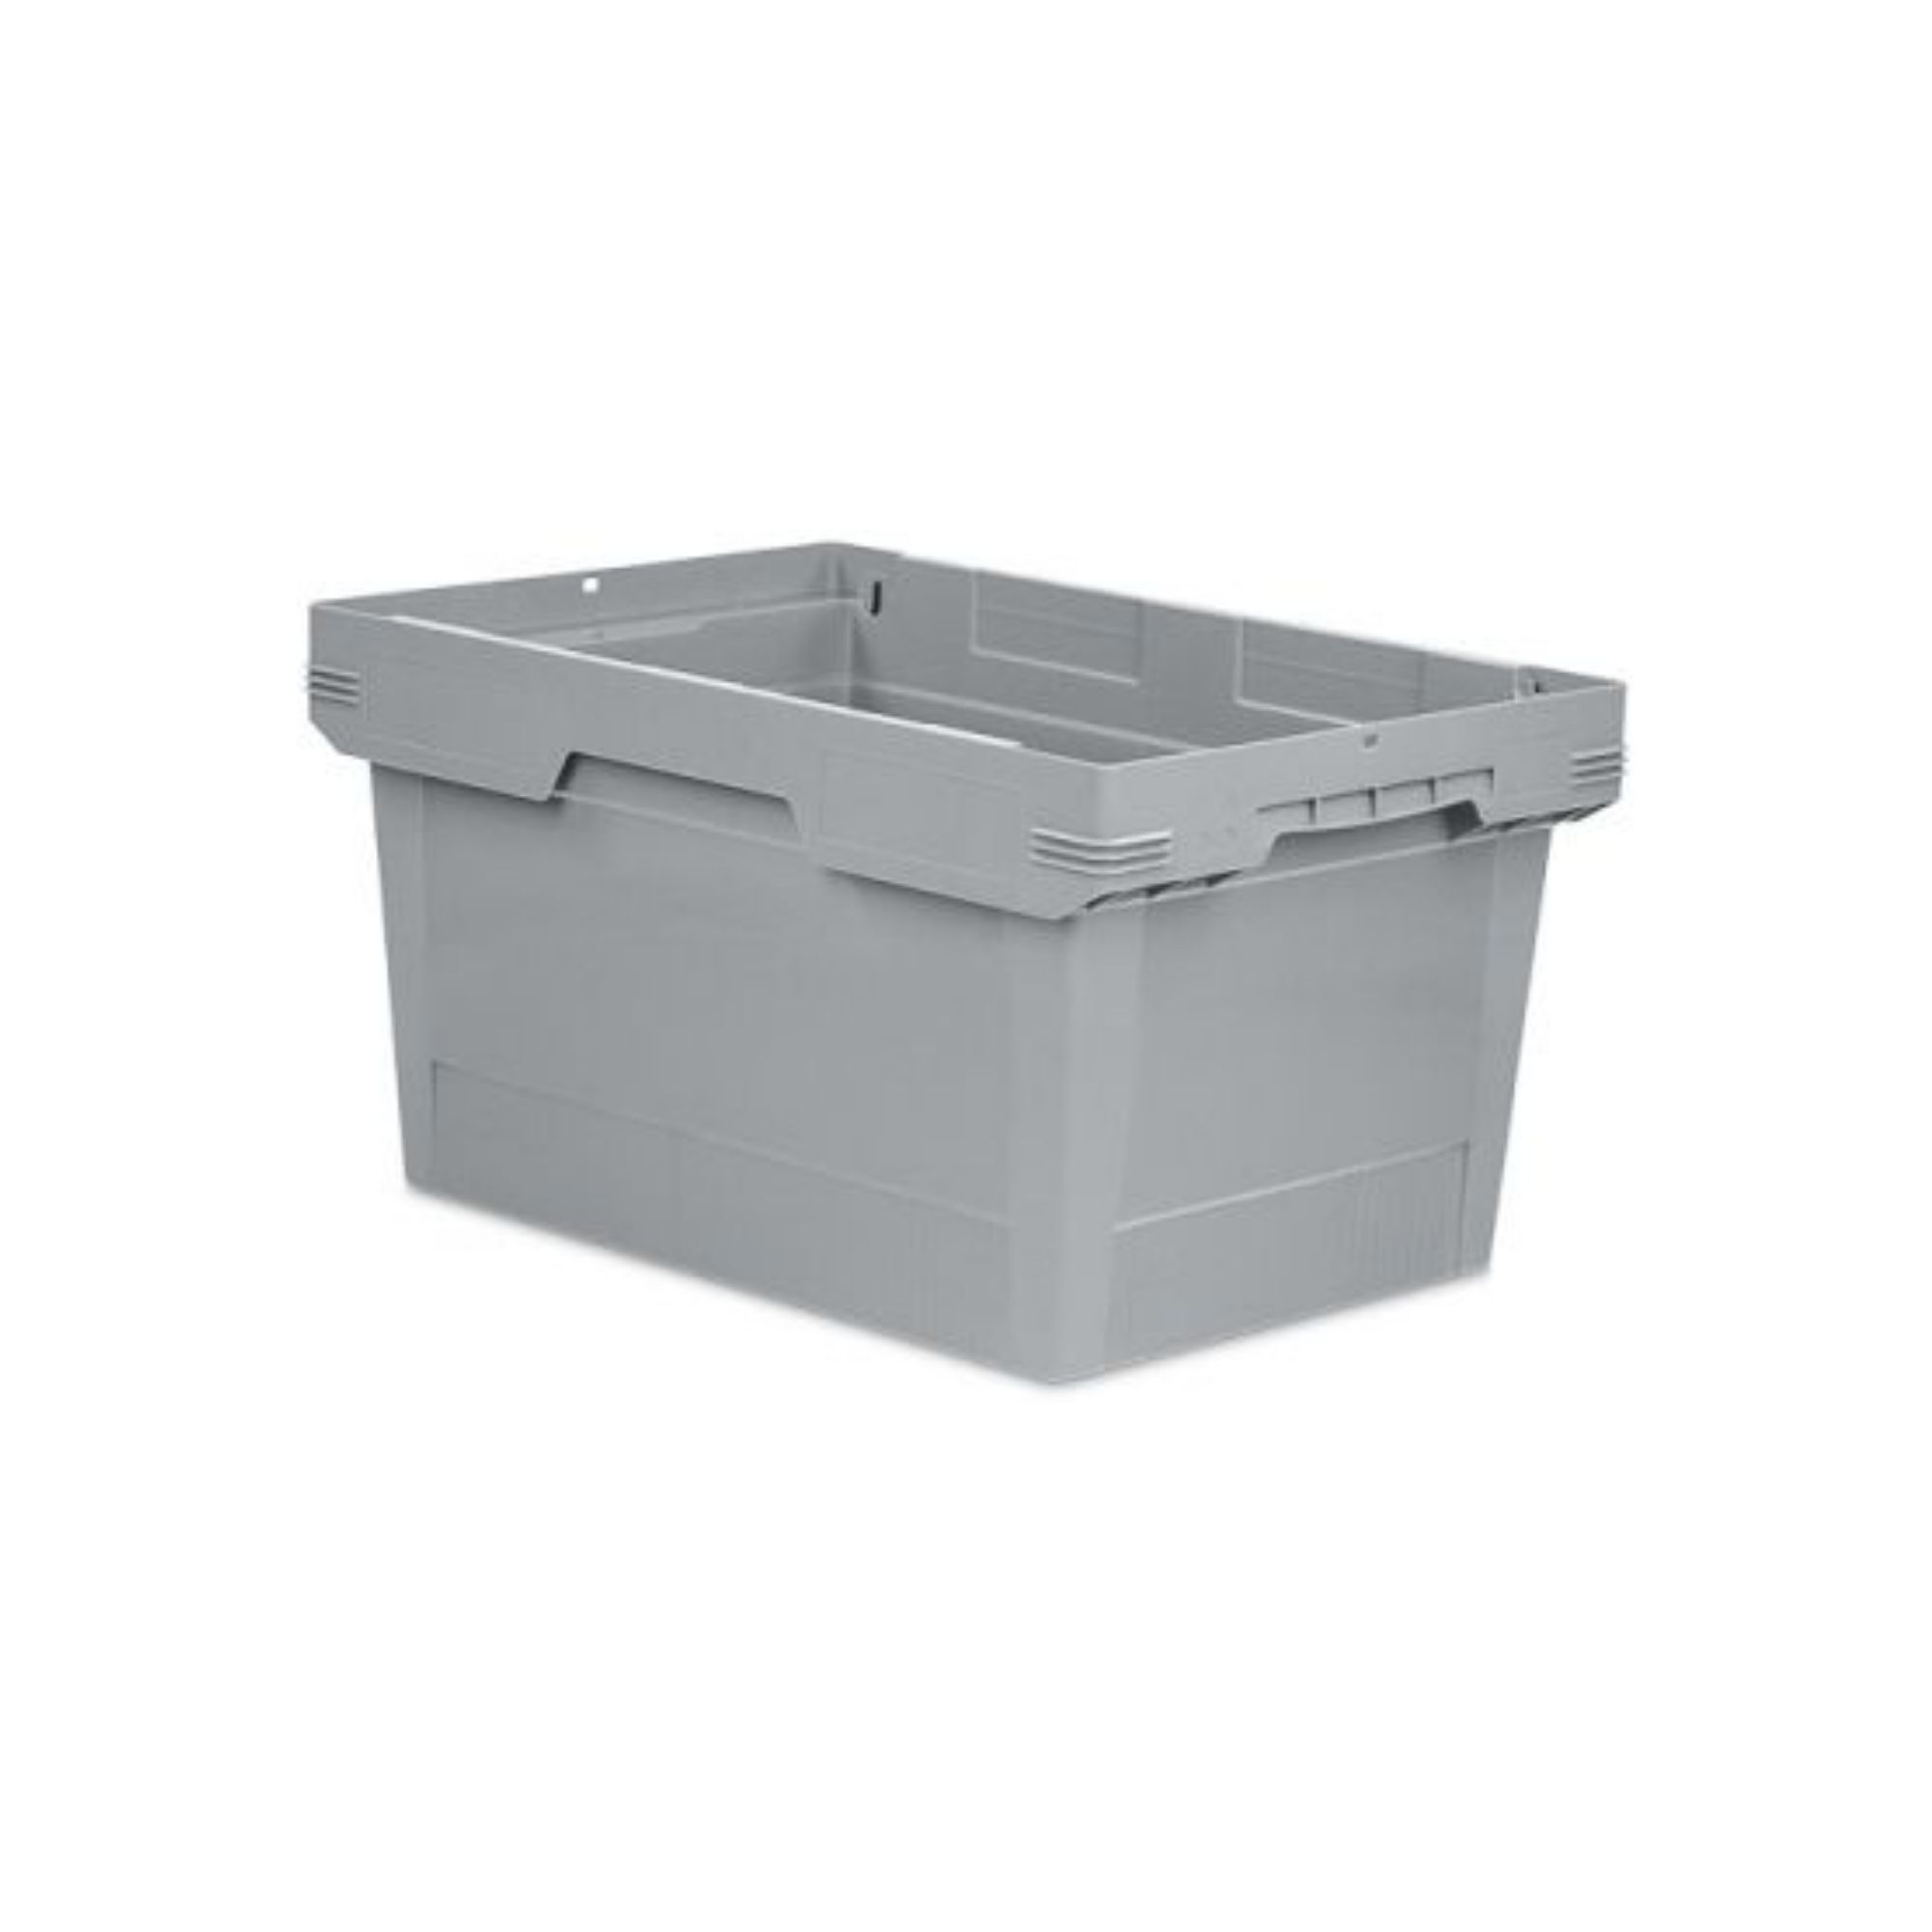 Conical Mehrweg-Stapelbehälter Grau | HxBxT 32,3x40x60cm | 58 Liter | Lagerbox Eurobox Transportbox Transportbehälter Stapelbehälter